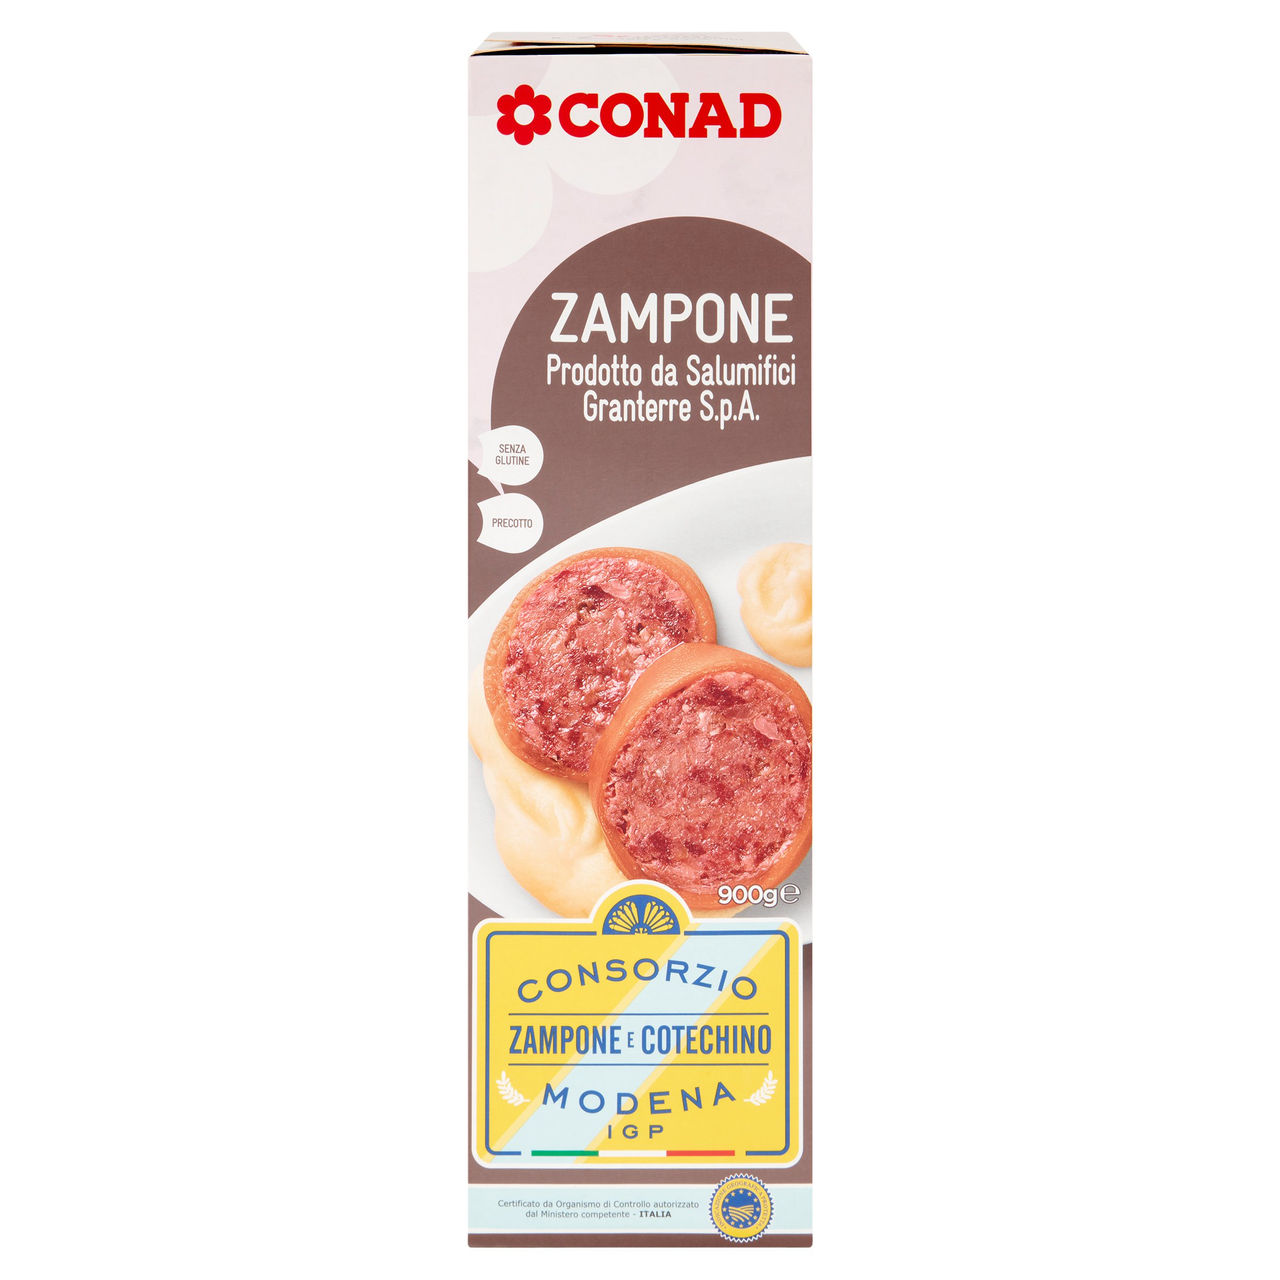 CONAD Zampone Modena IGP 900 g